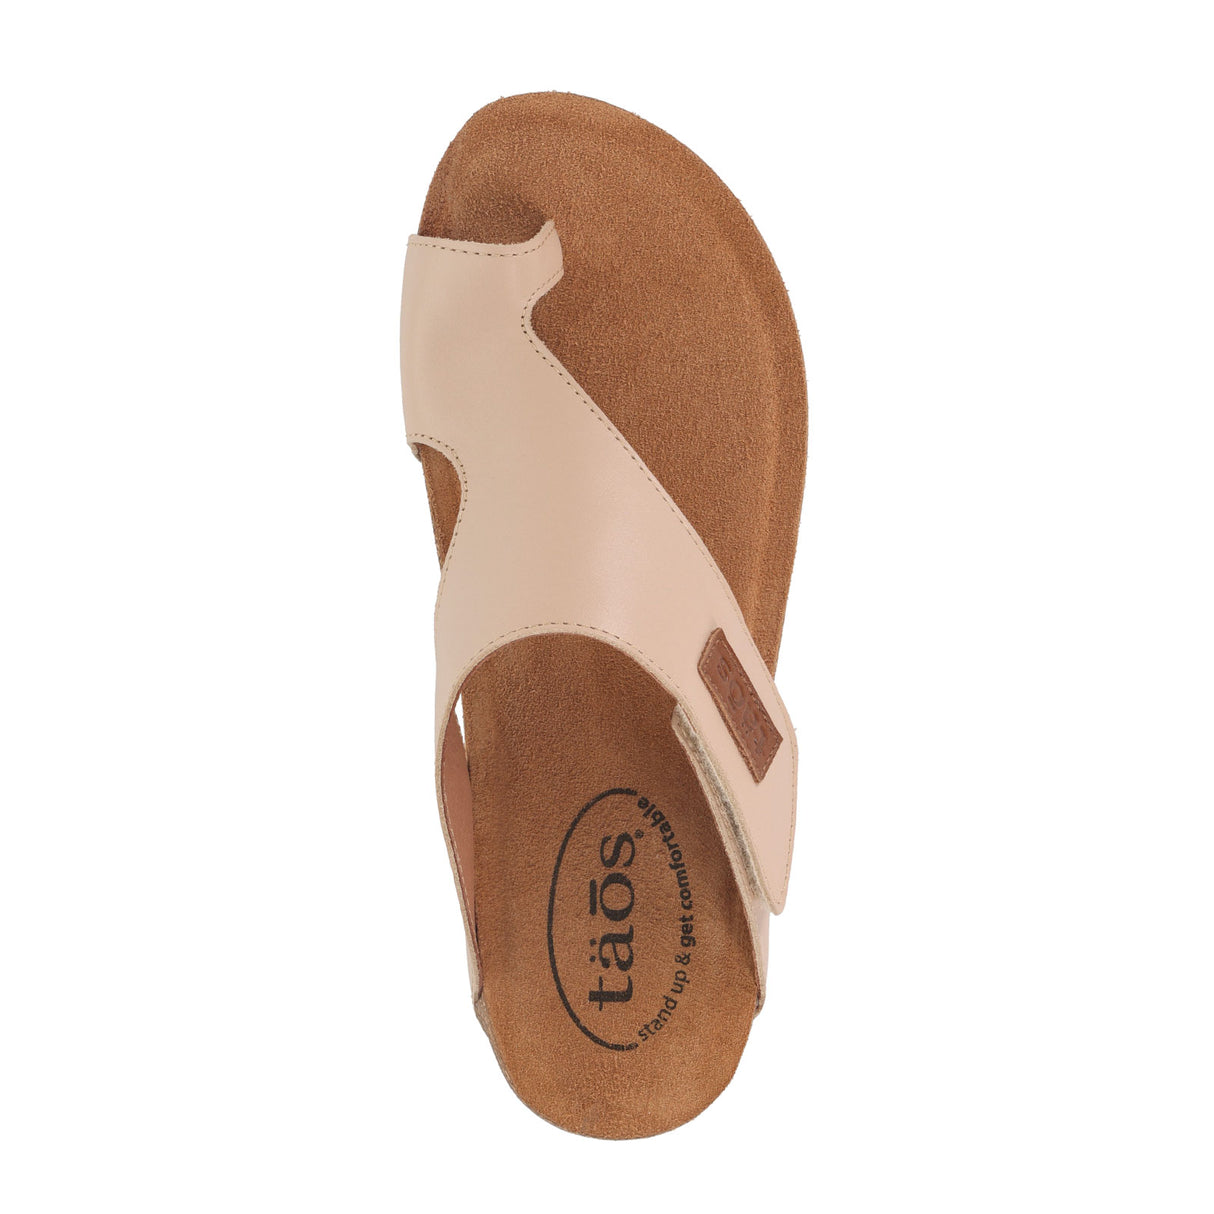 Taos Loop Sandal (Women) - Natural Sandals - Thong - The Heel Shoe Fitters